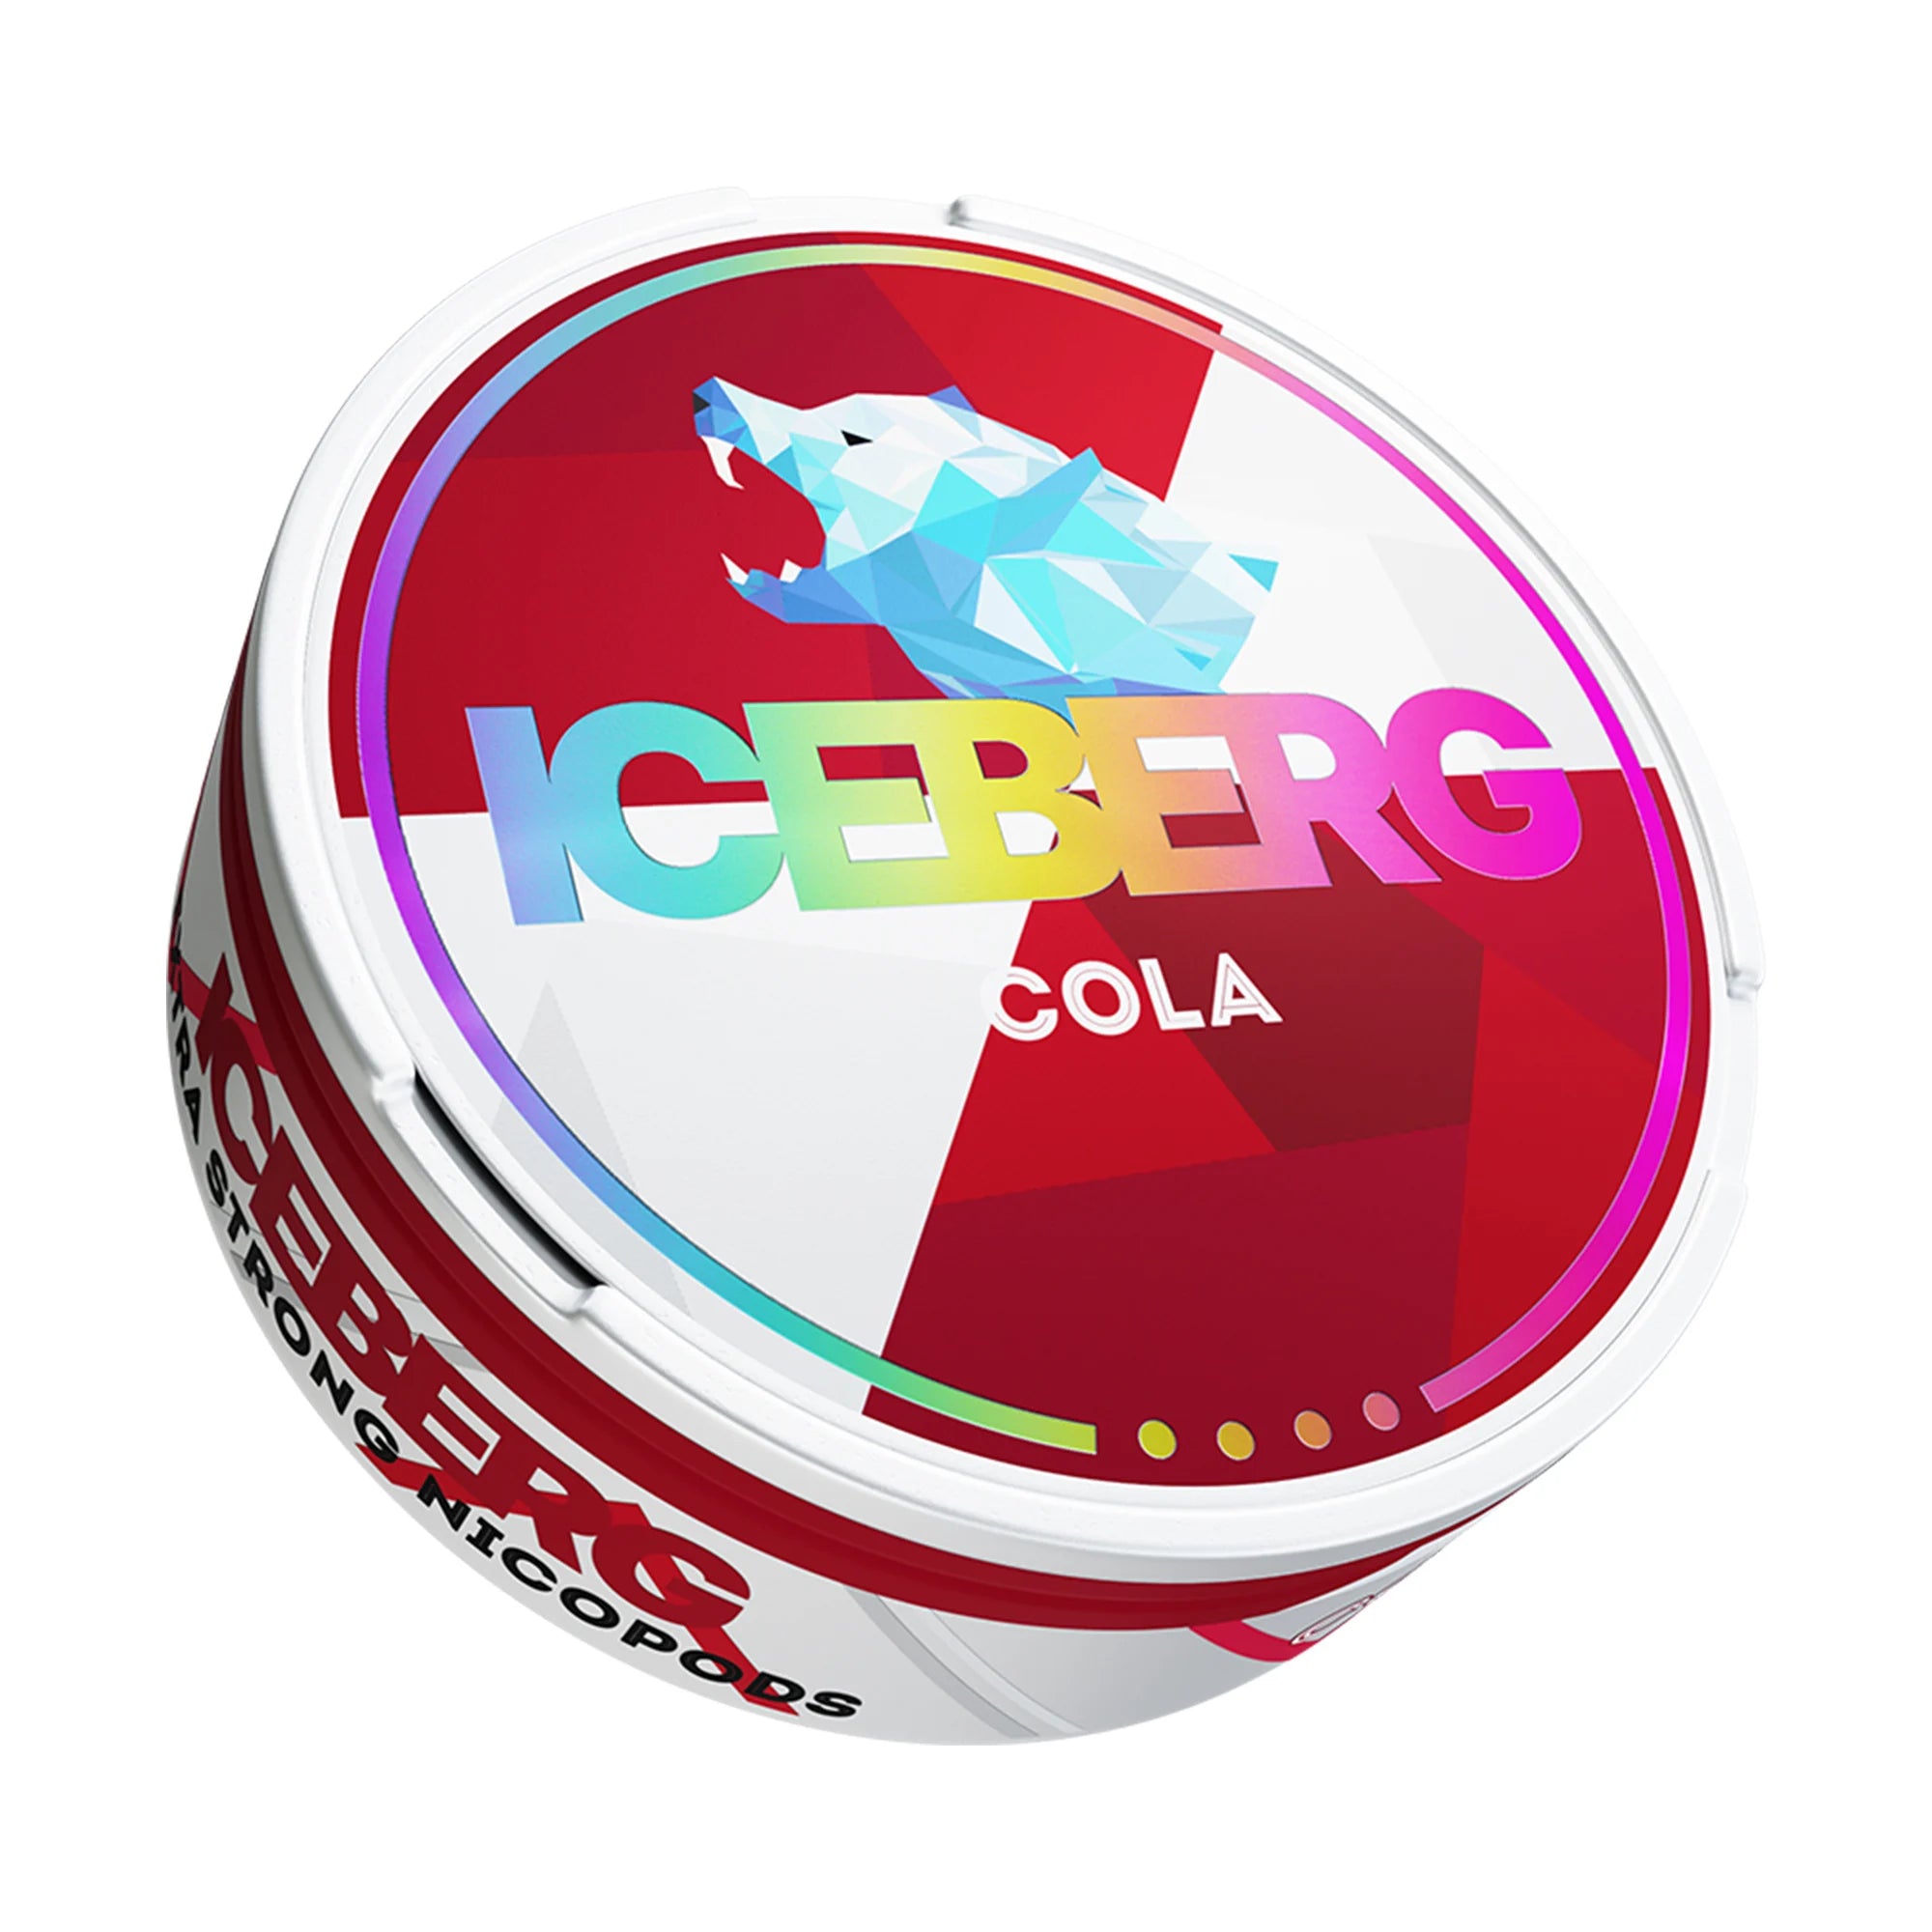 Iceberg Cola - EUK